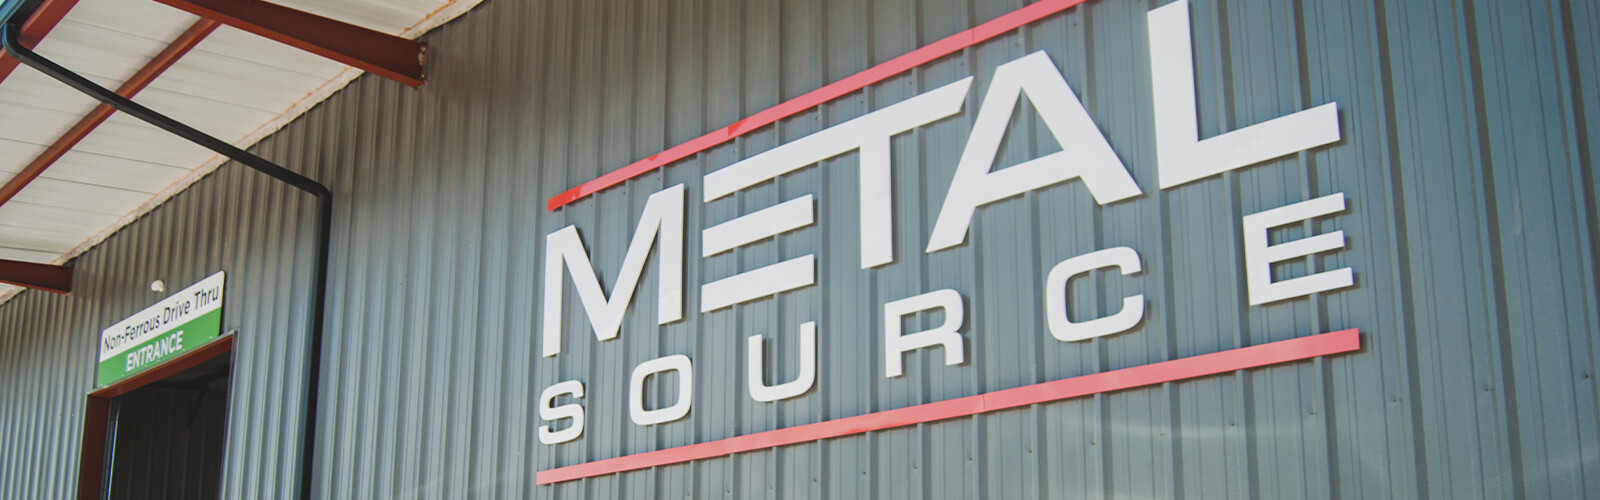 Metal Source